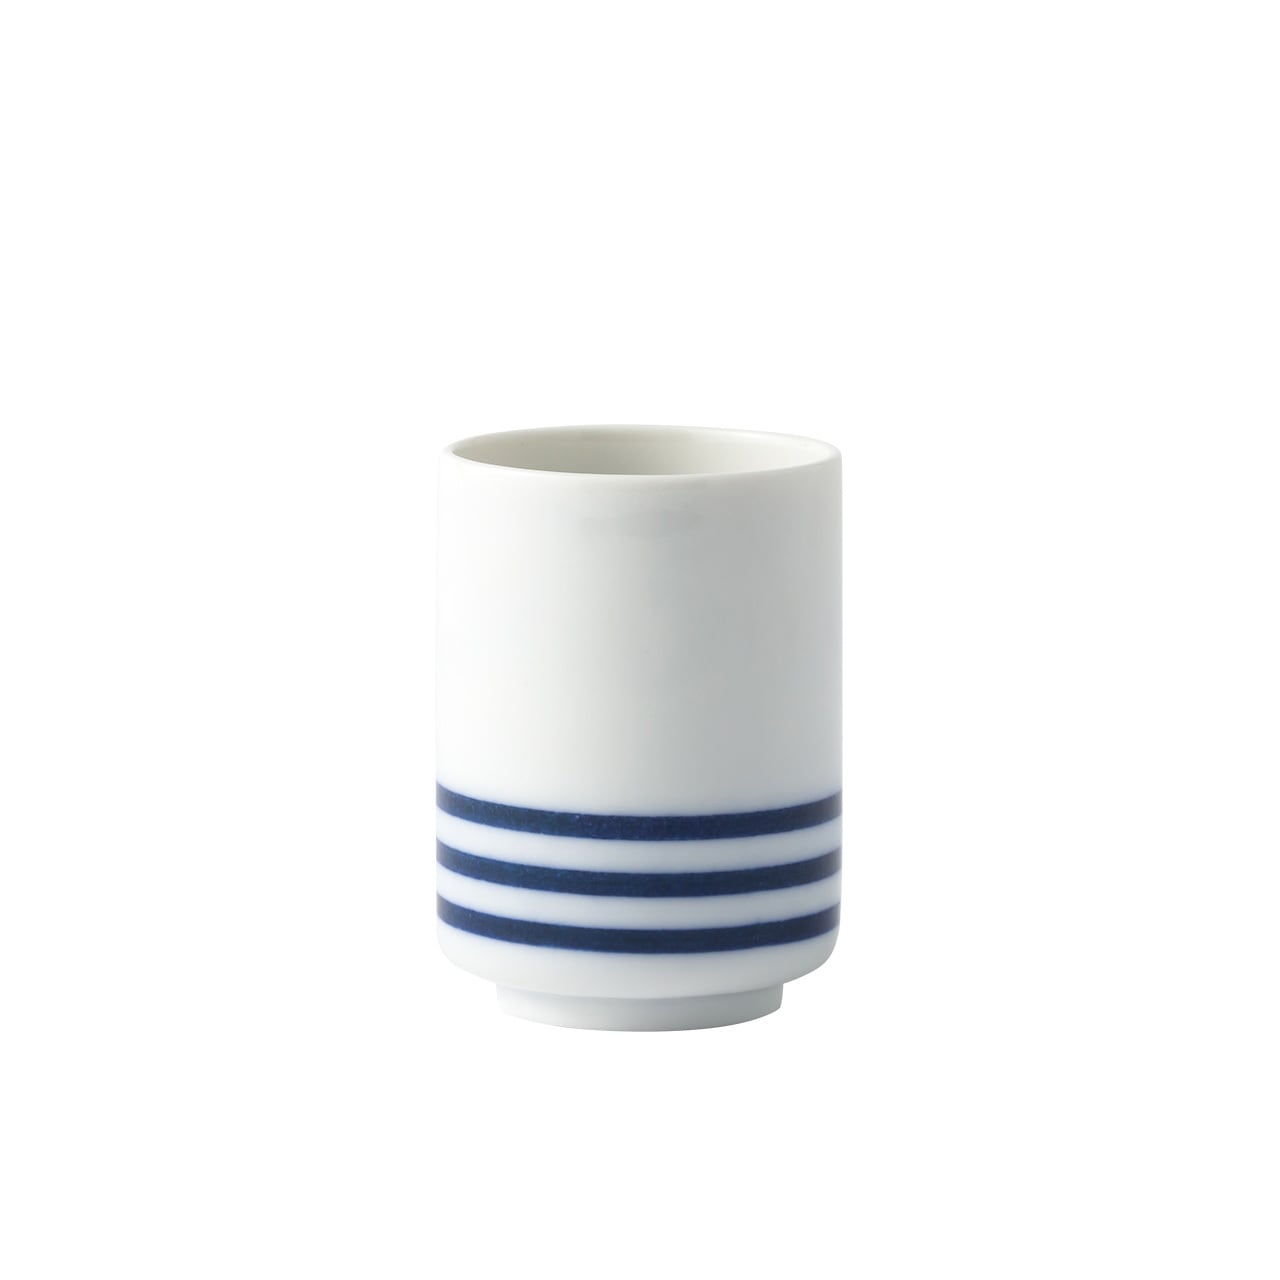 Striped teacup